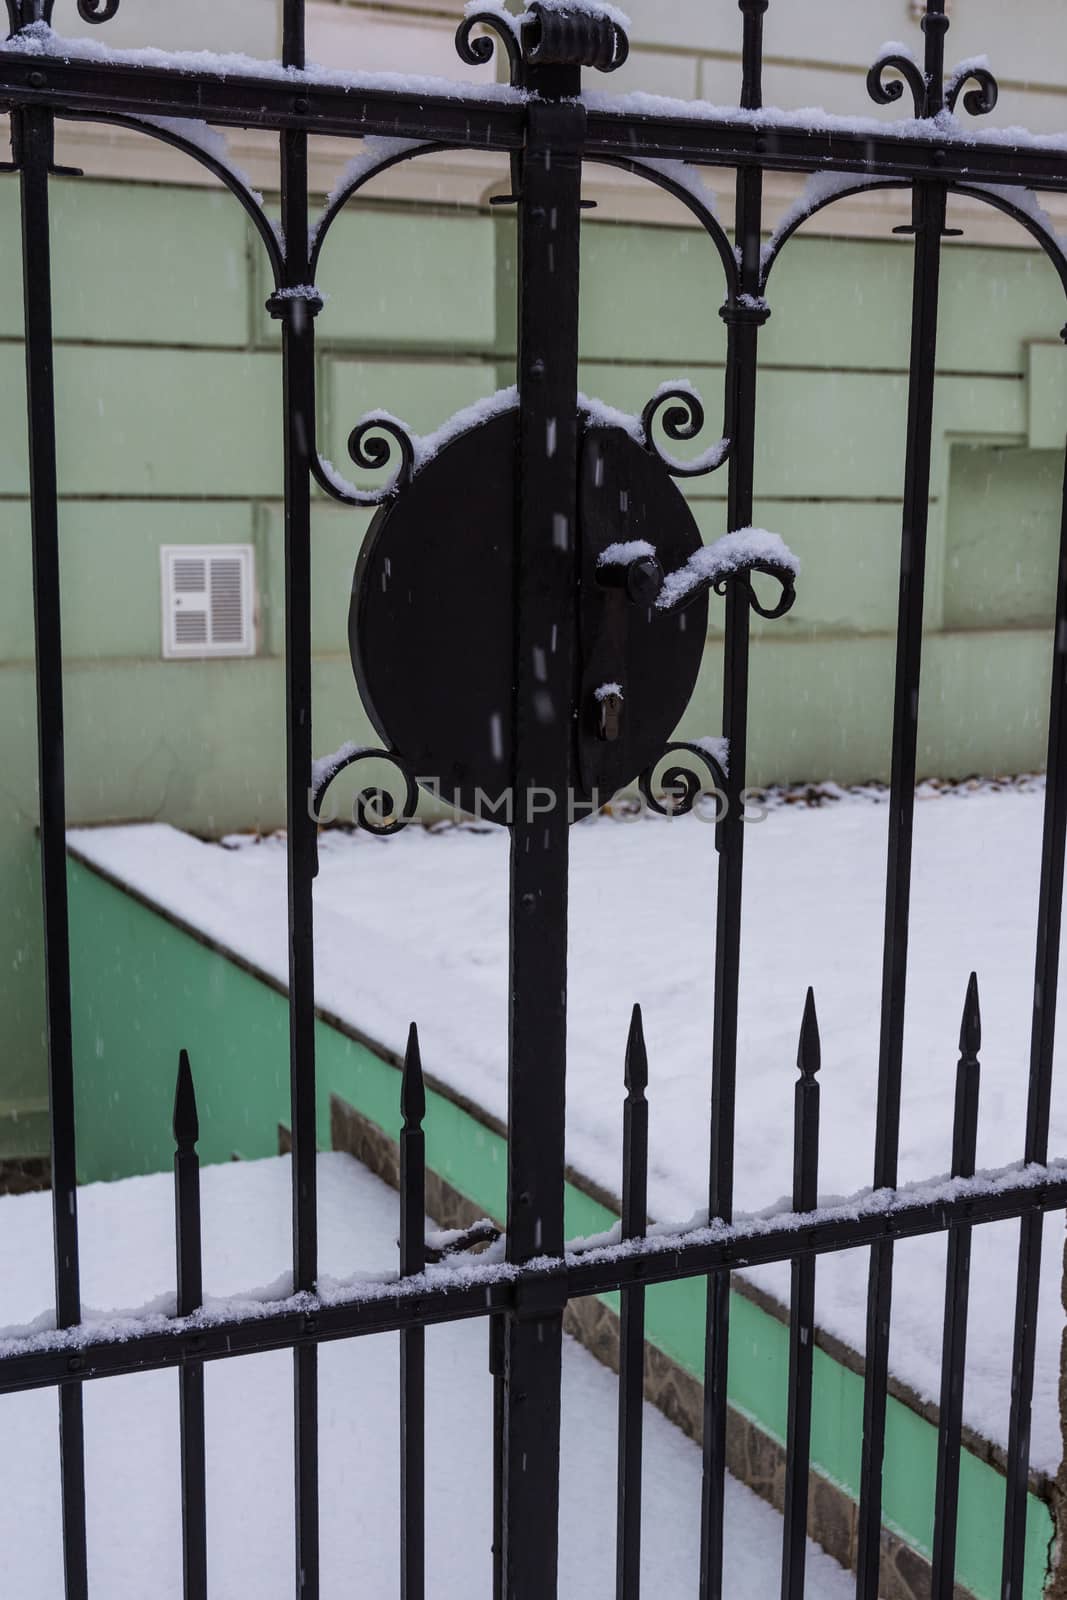 Winter snow fencing, building security, winter texture